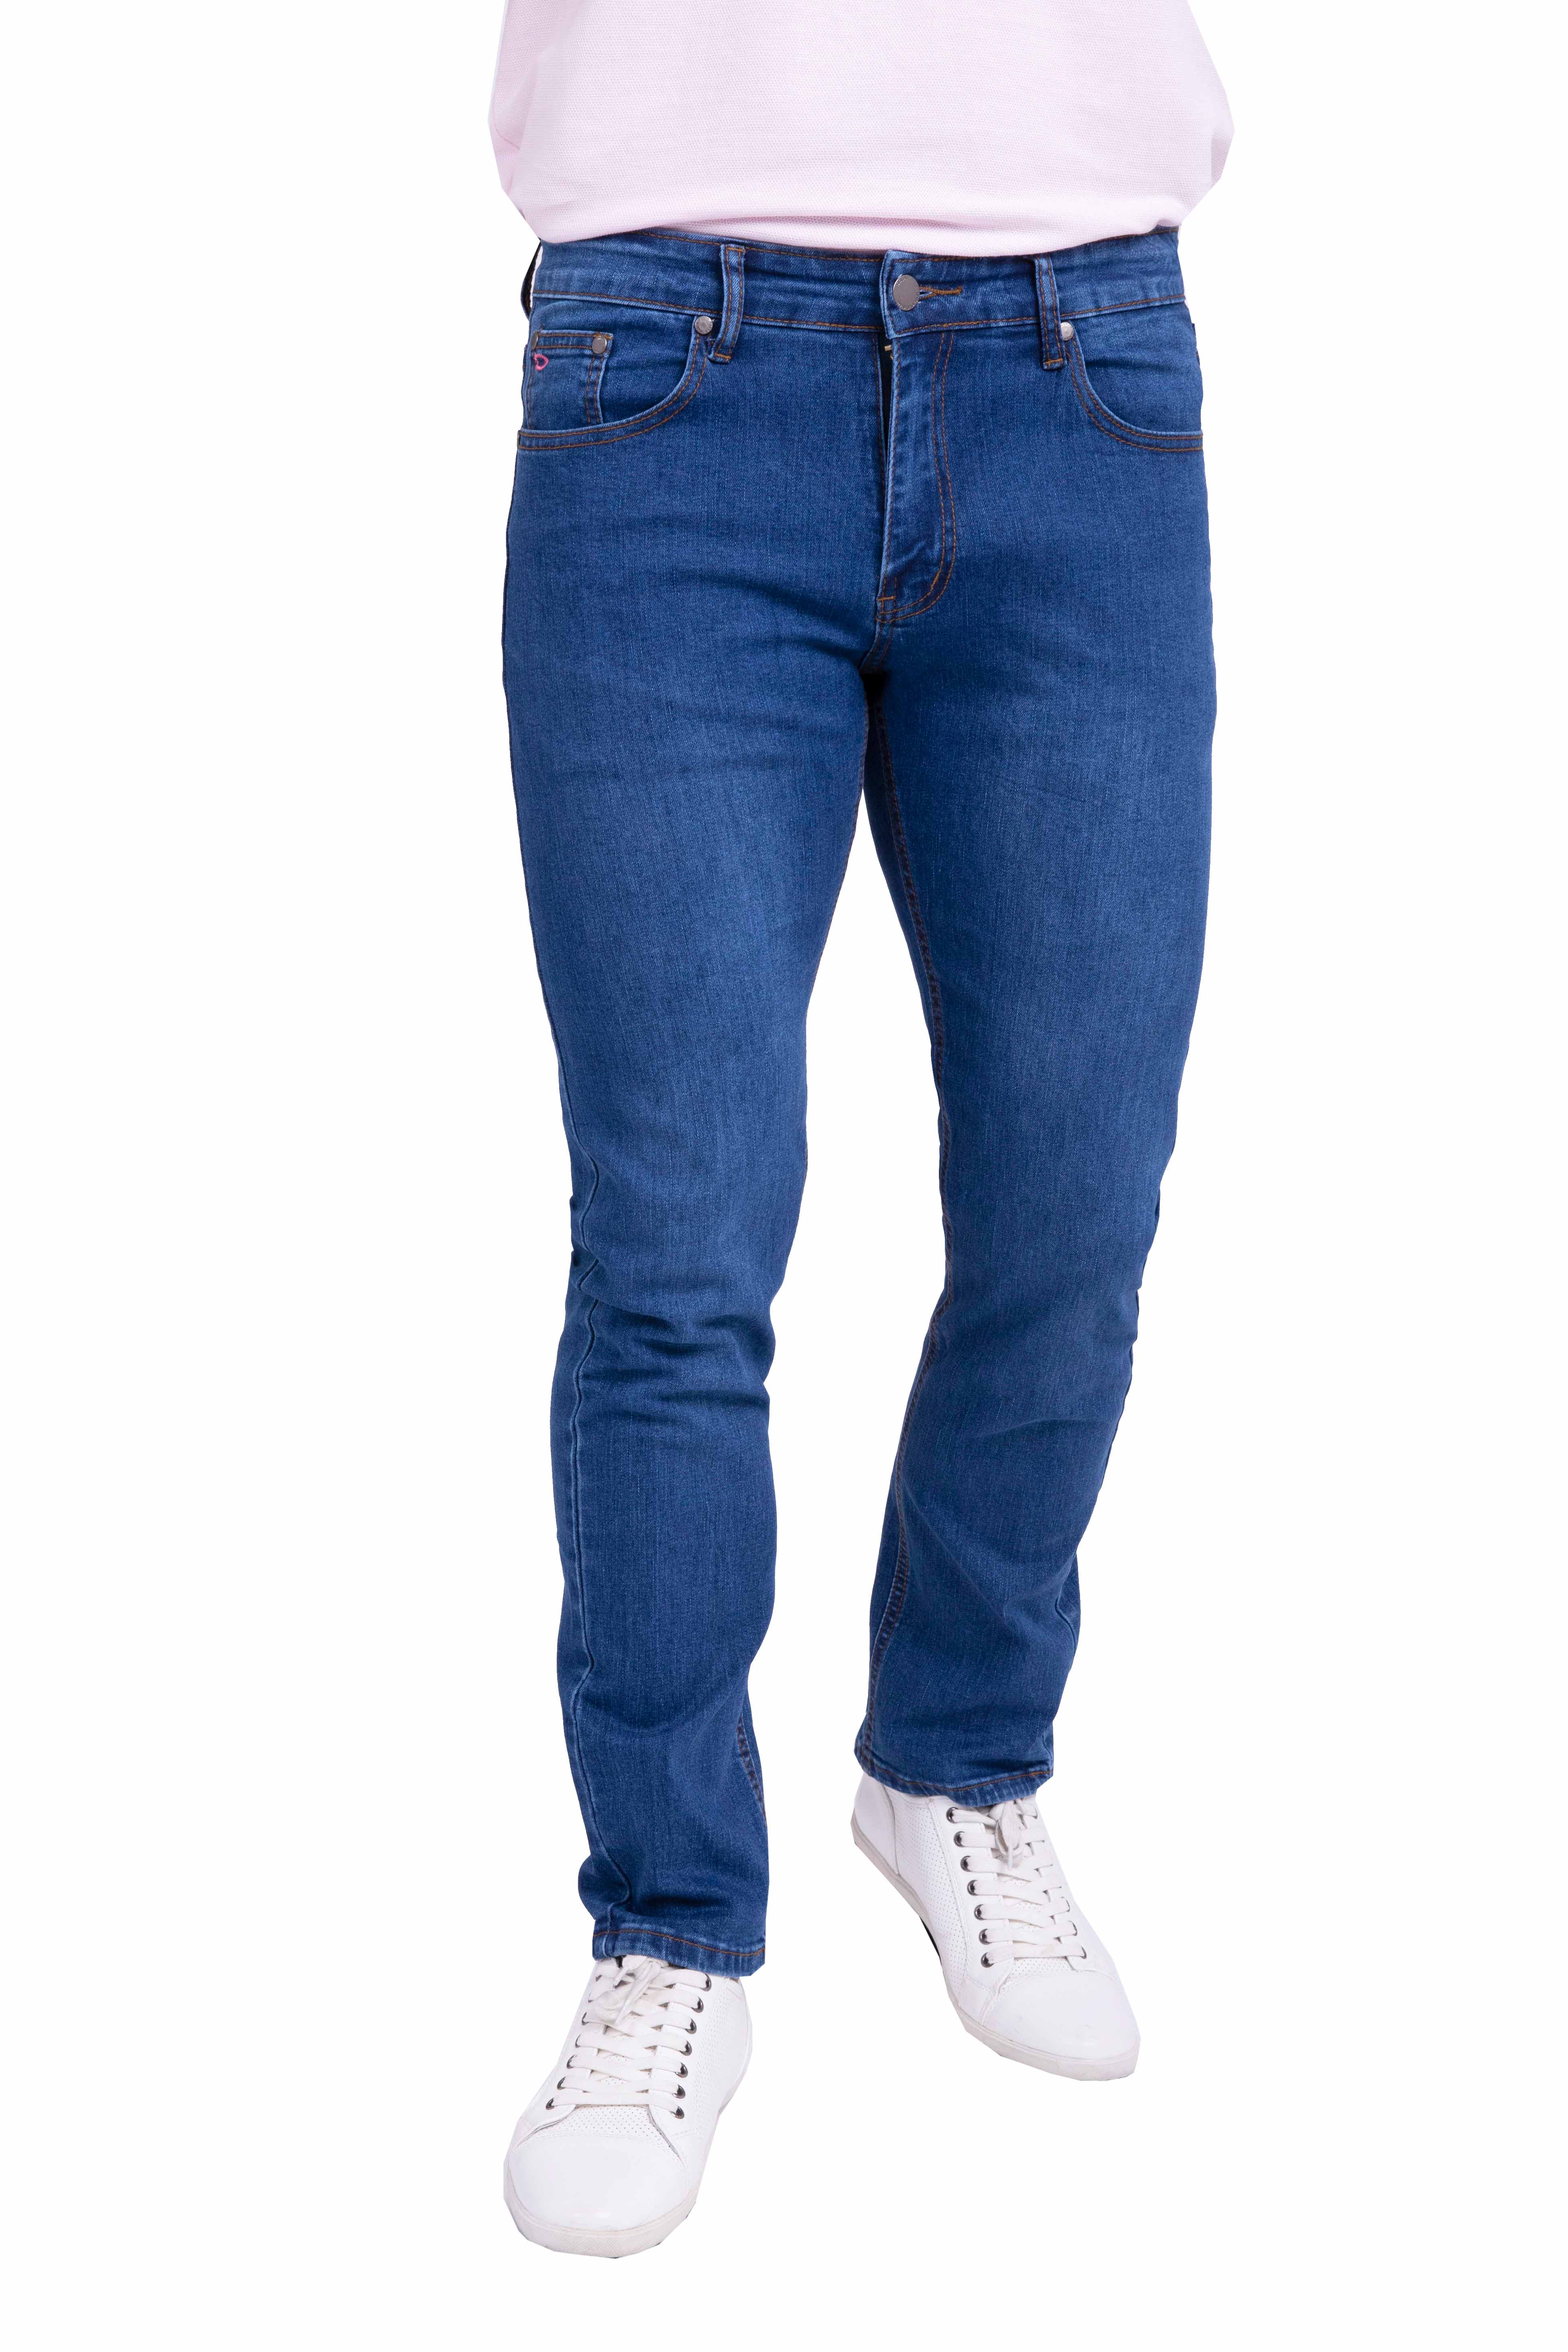 CABALLEROS-pantalones-jeans-oscar-p-caballeros